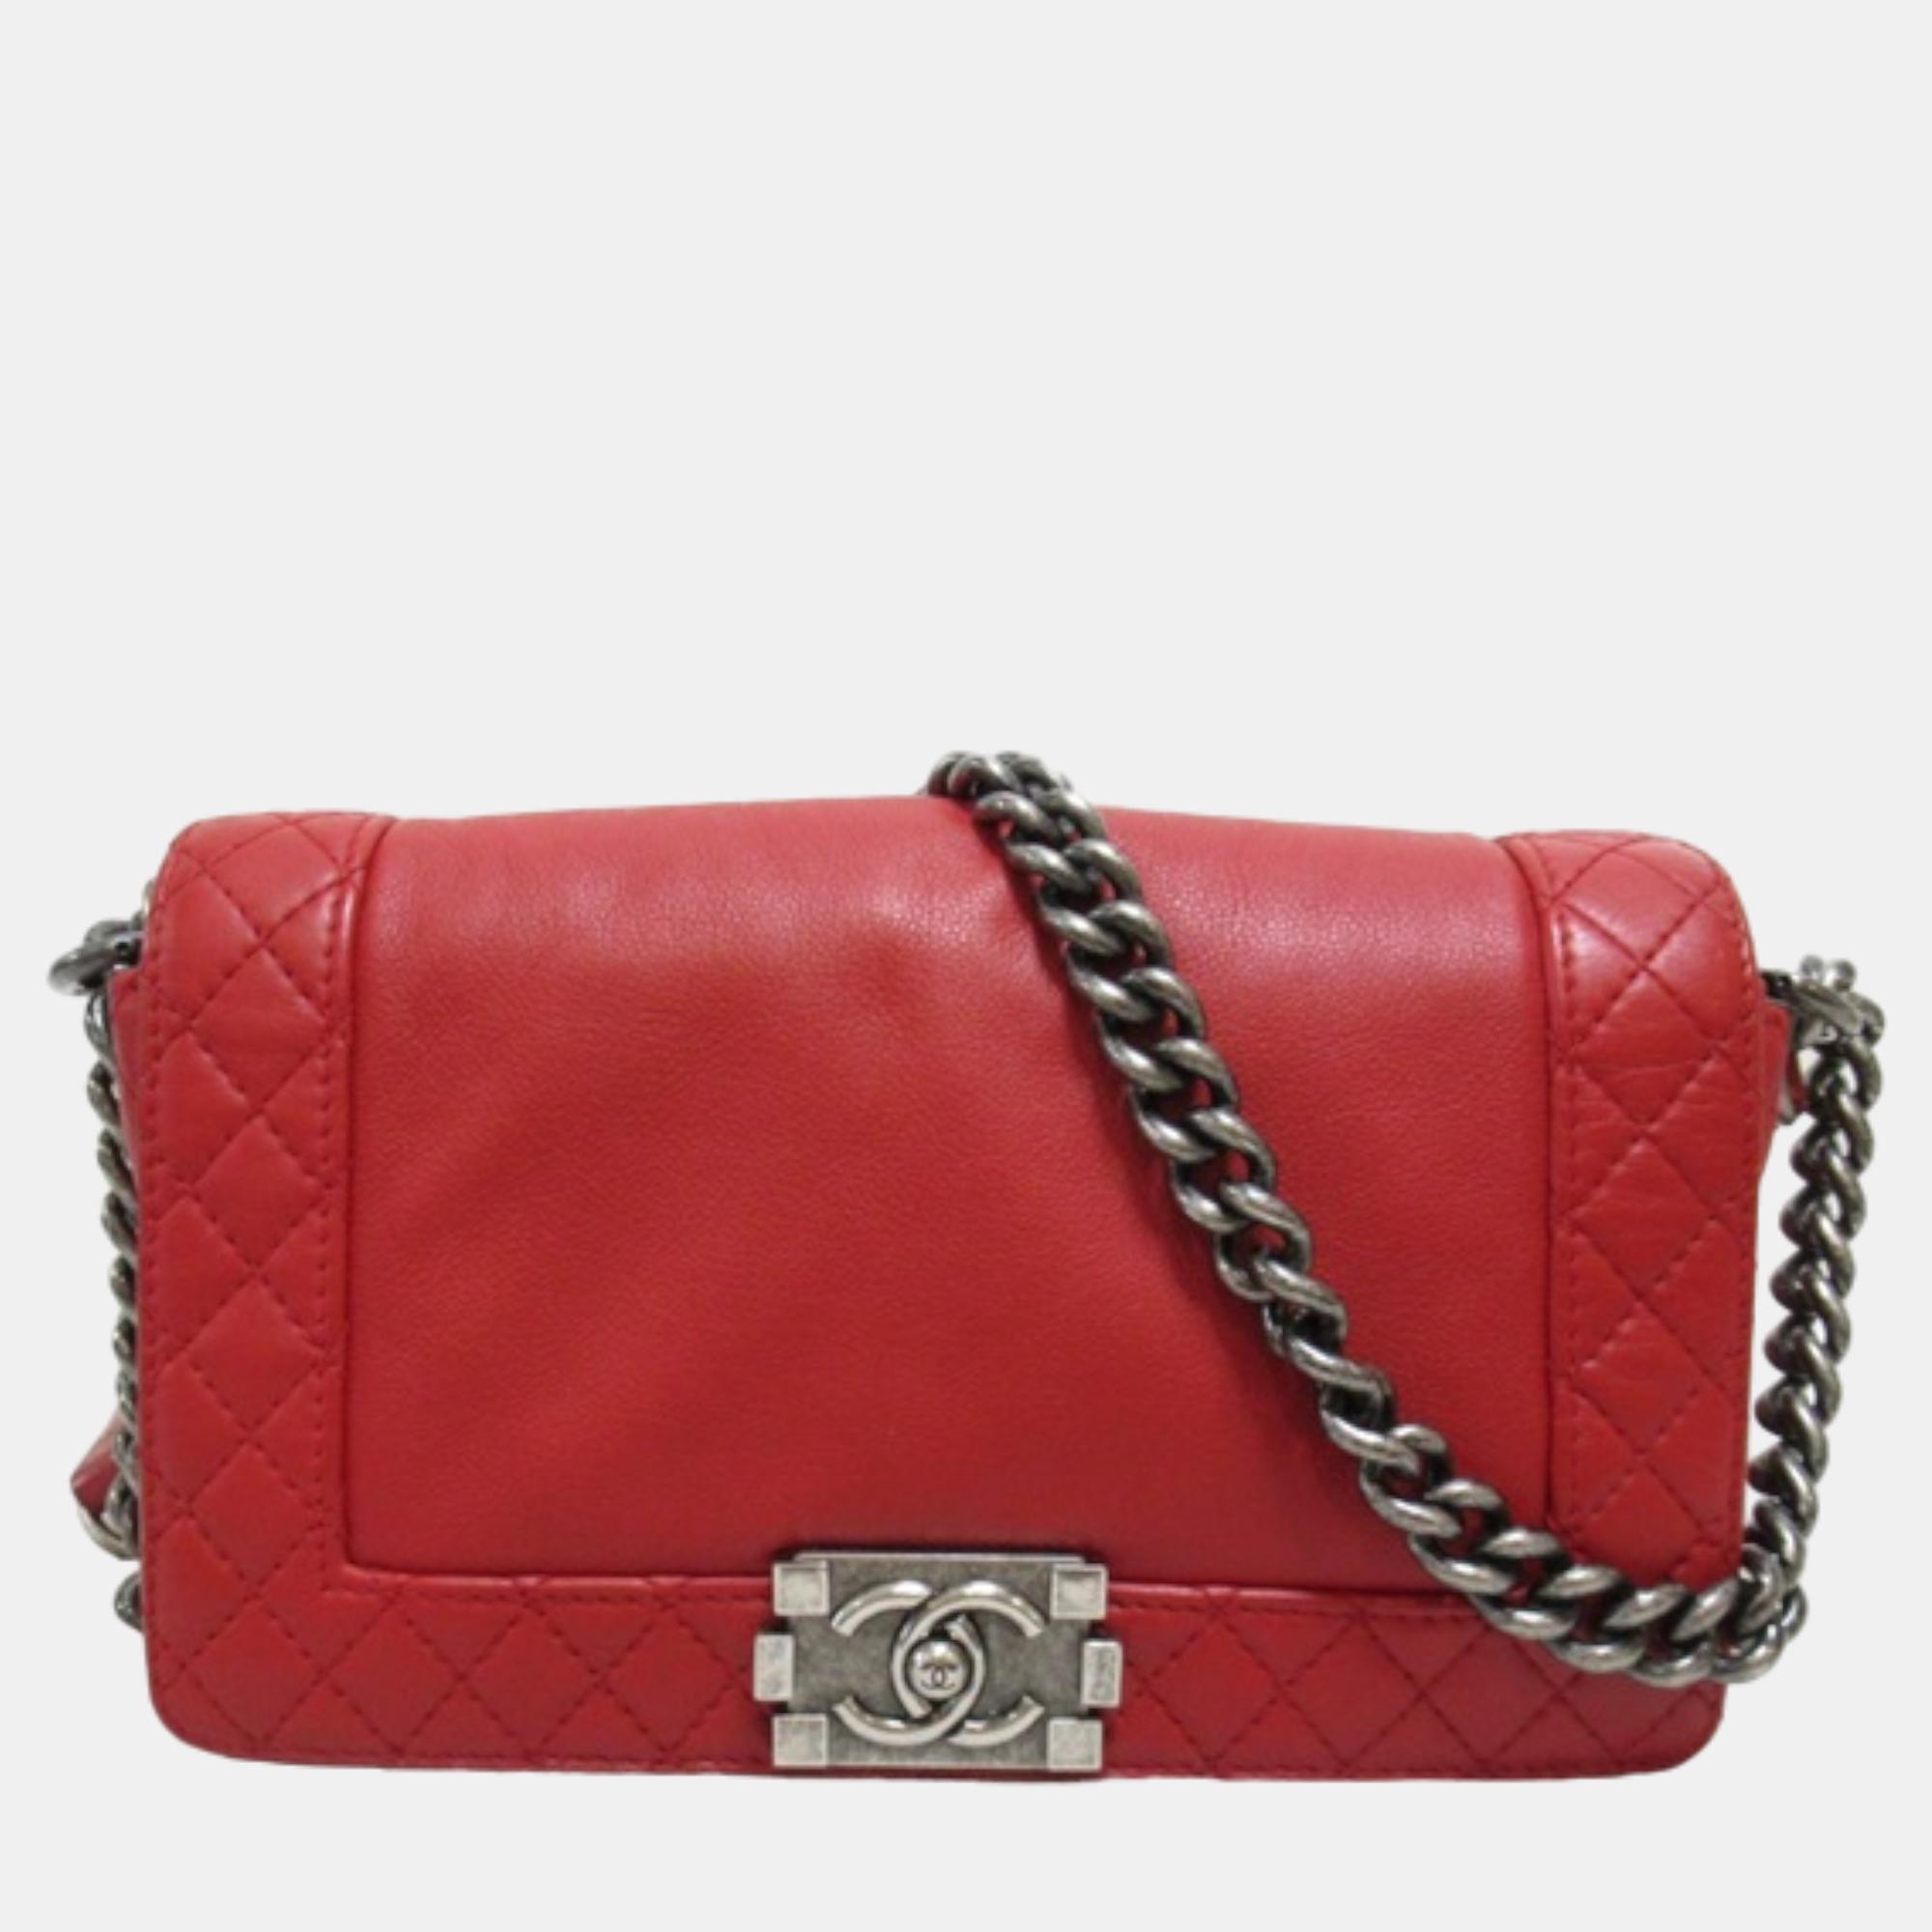 Chanel red leather medium boy reverso flap bag